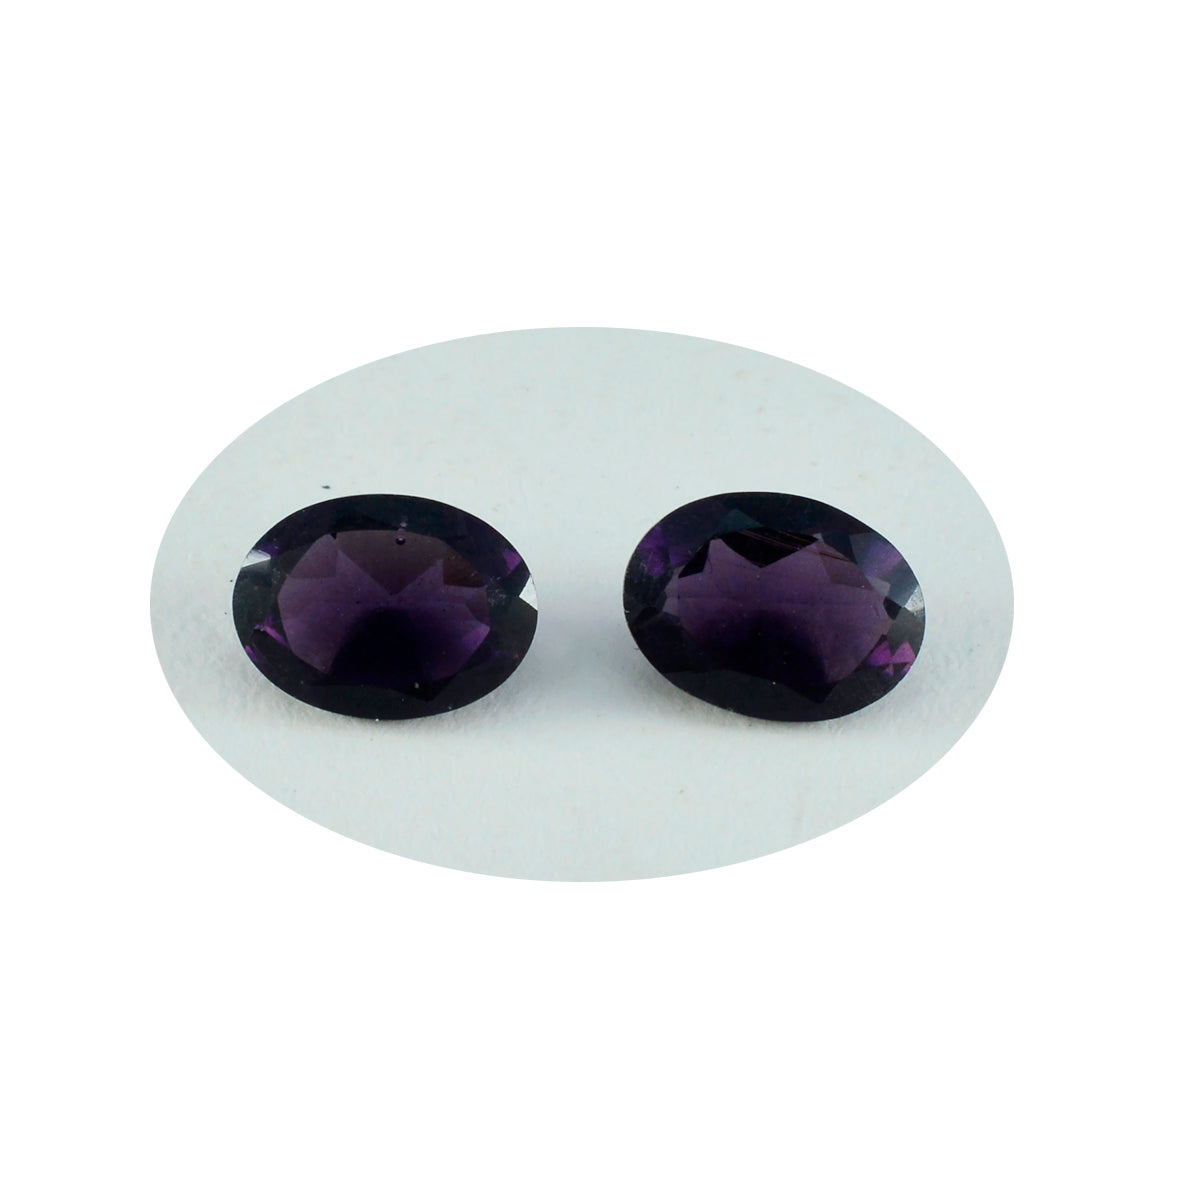 Riyogems 1PC Purple Amethyst CZ Faceted 9x11 mm Oval Shape sweet Quality Loose Gem